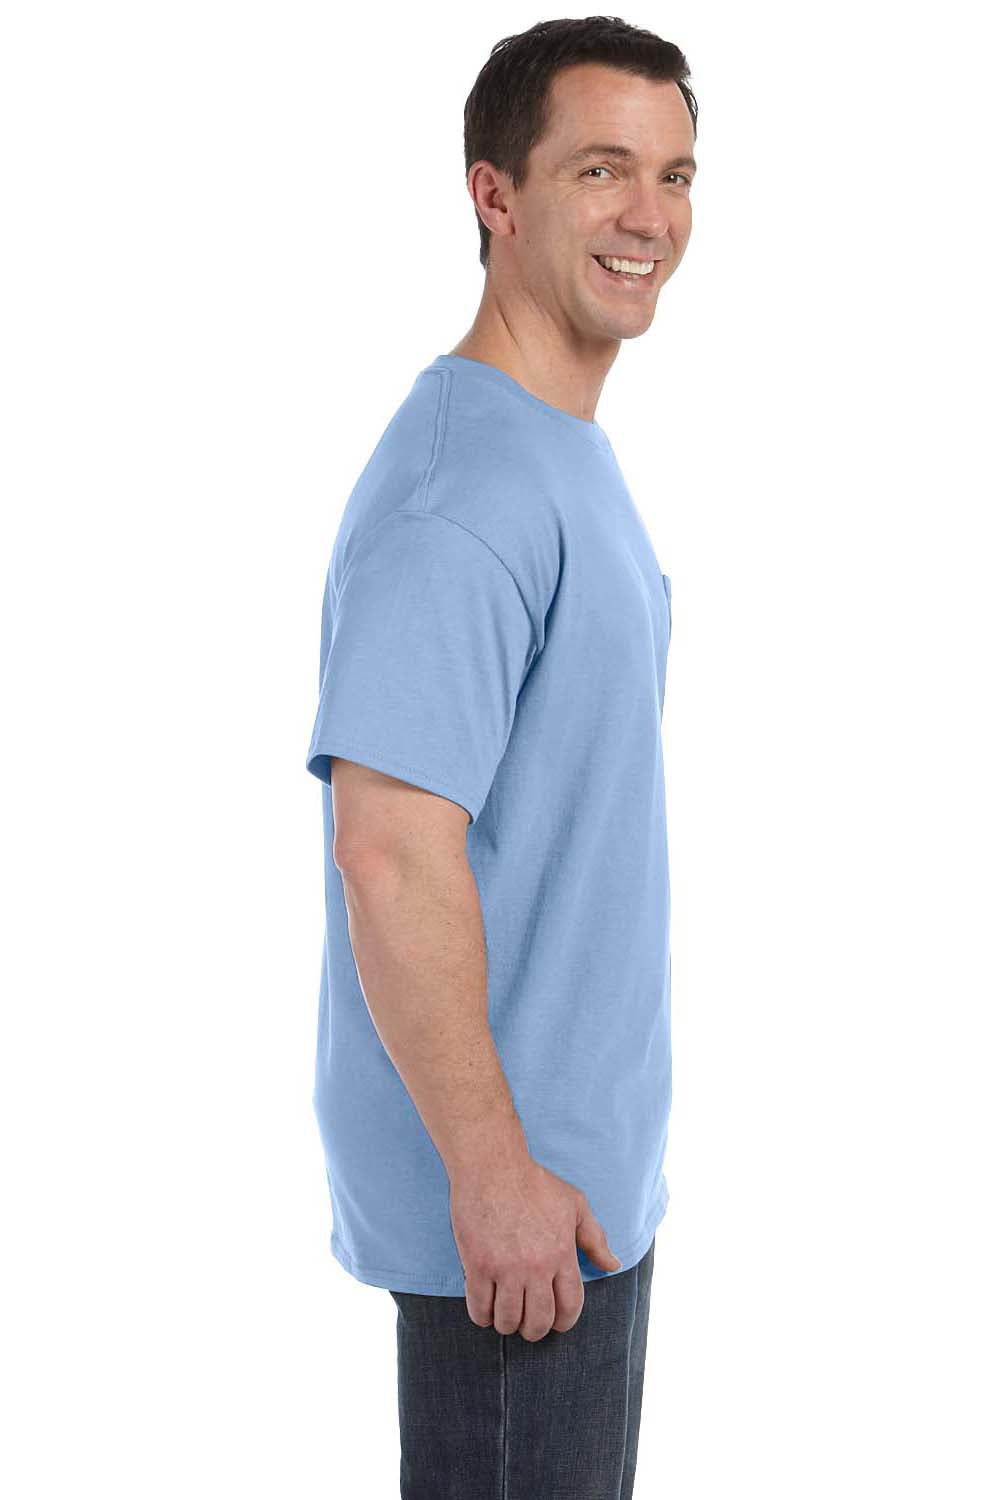 Hanes H5590 Mens ComfortSoft Short Sleeve Crewneck T-Shirt w/ Pocket Light Blue Side